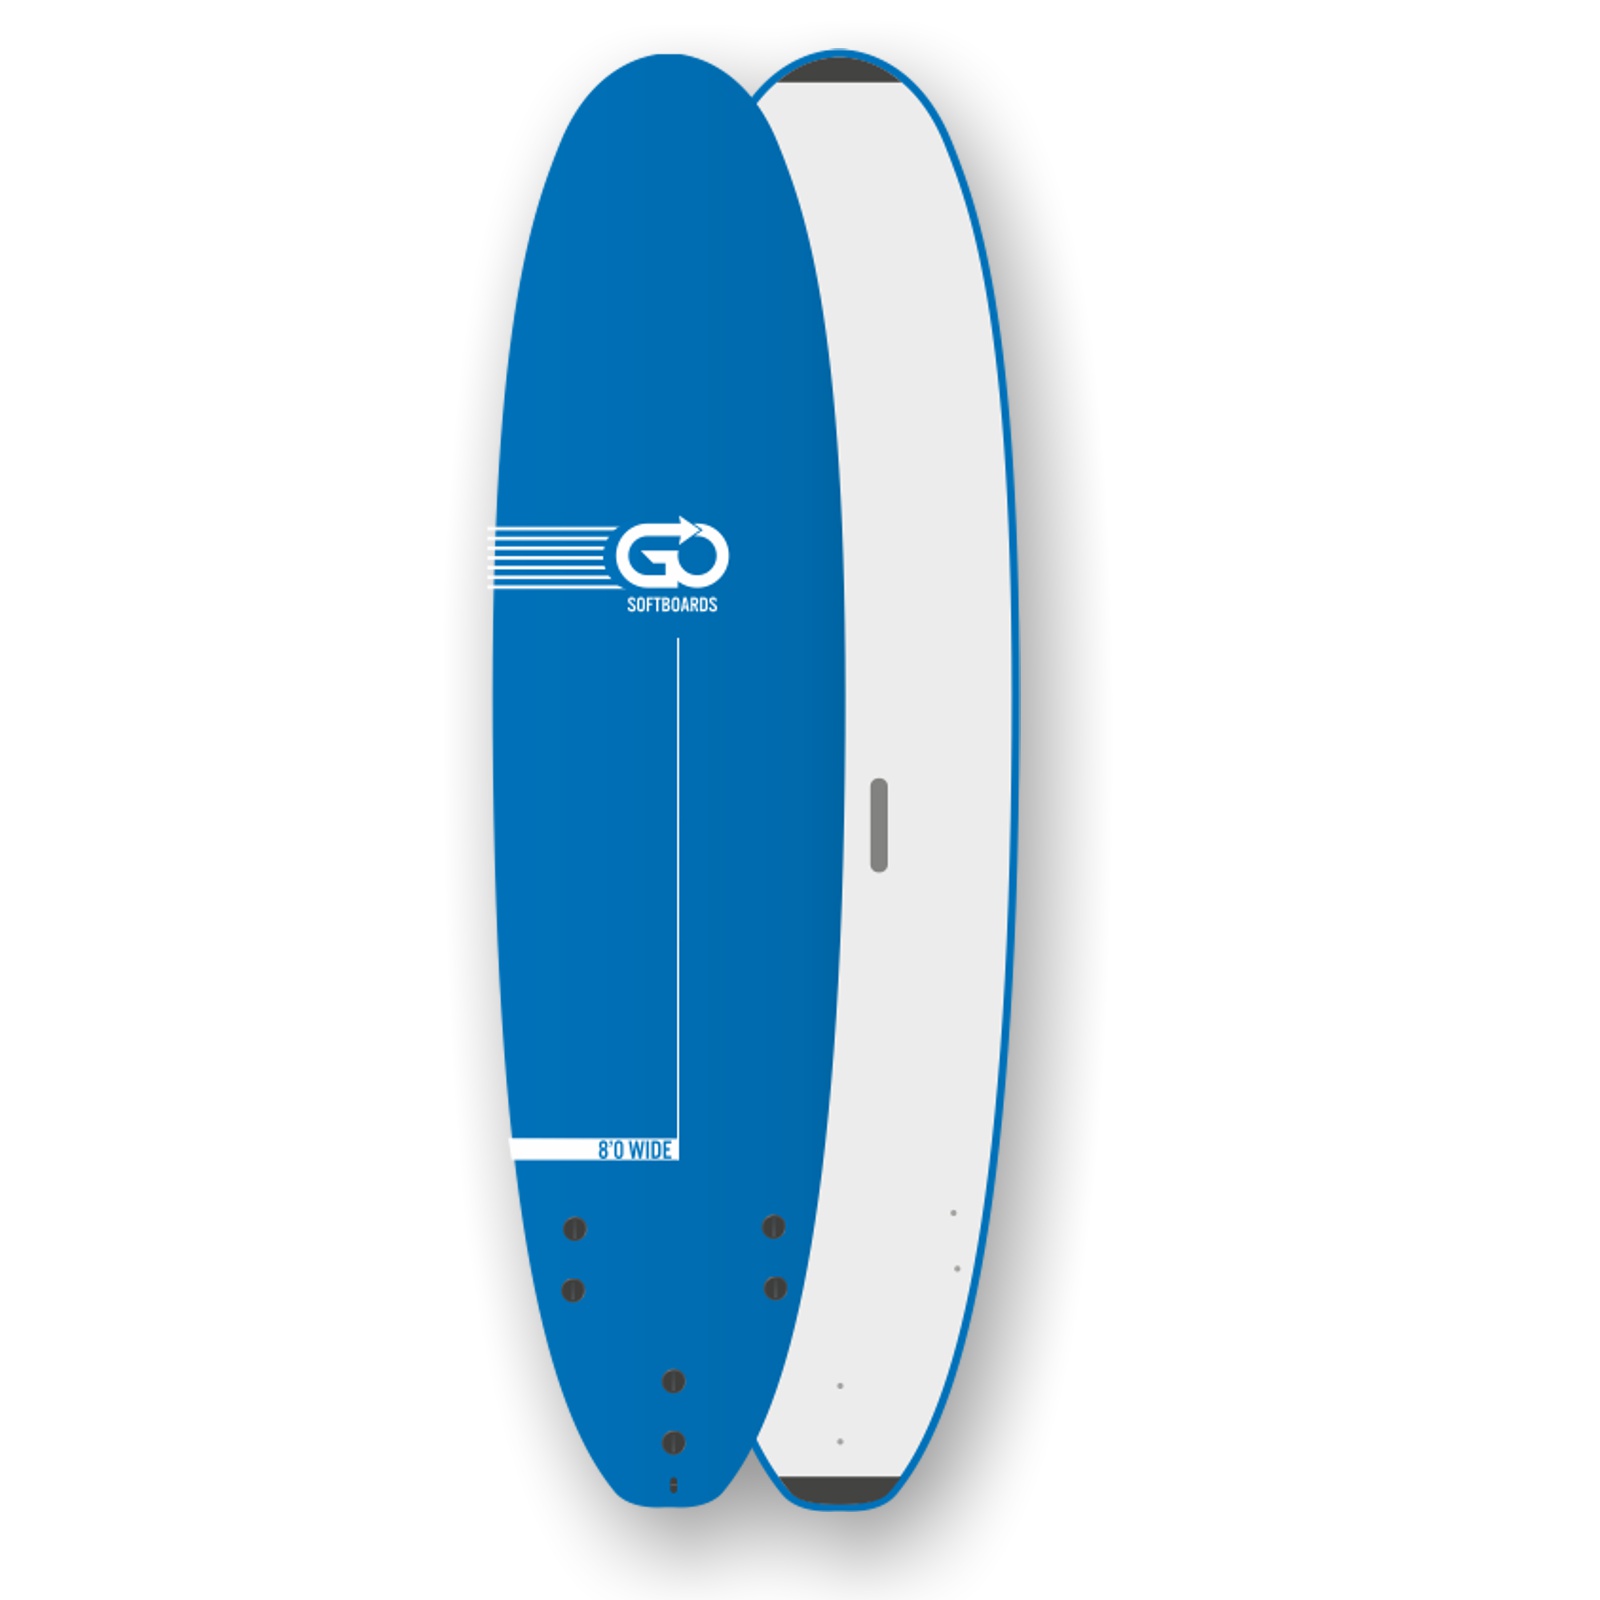 GO Softboard School Surfboard 8.0 wide body Blau